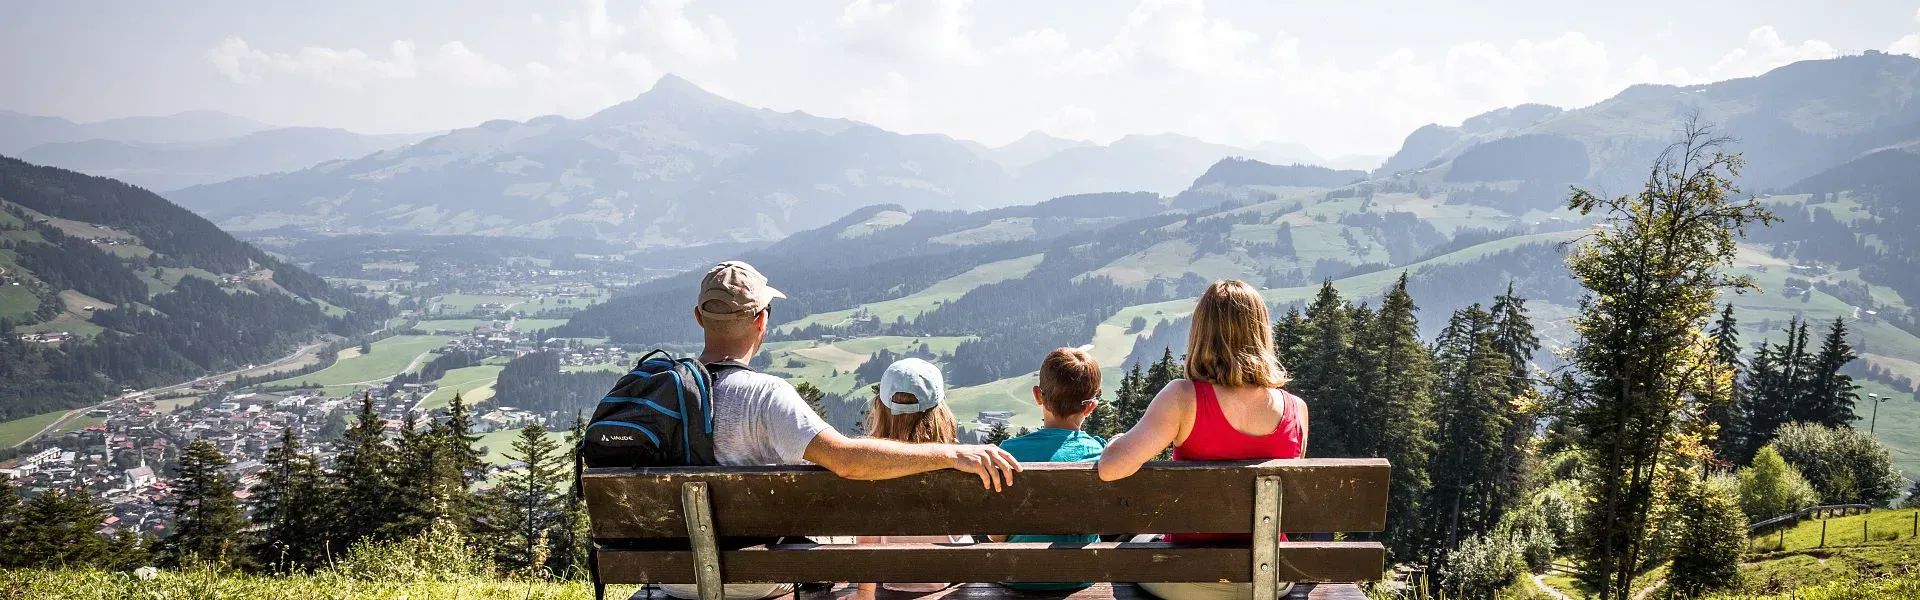 Wandern-Familie_Kitzbüheler Alpen_Mathäus Gartner (2018)25